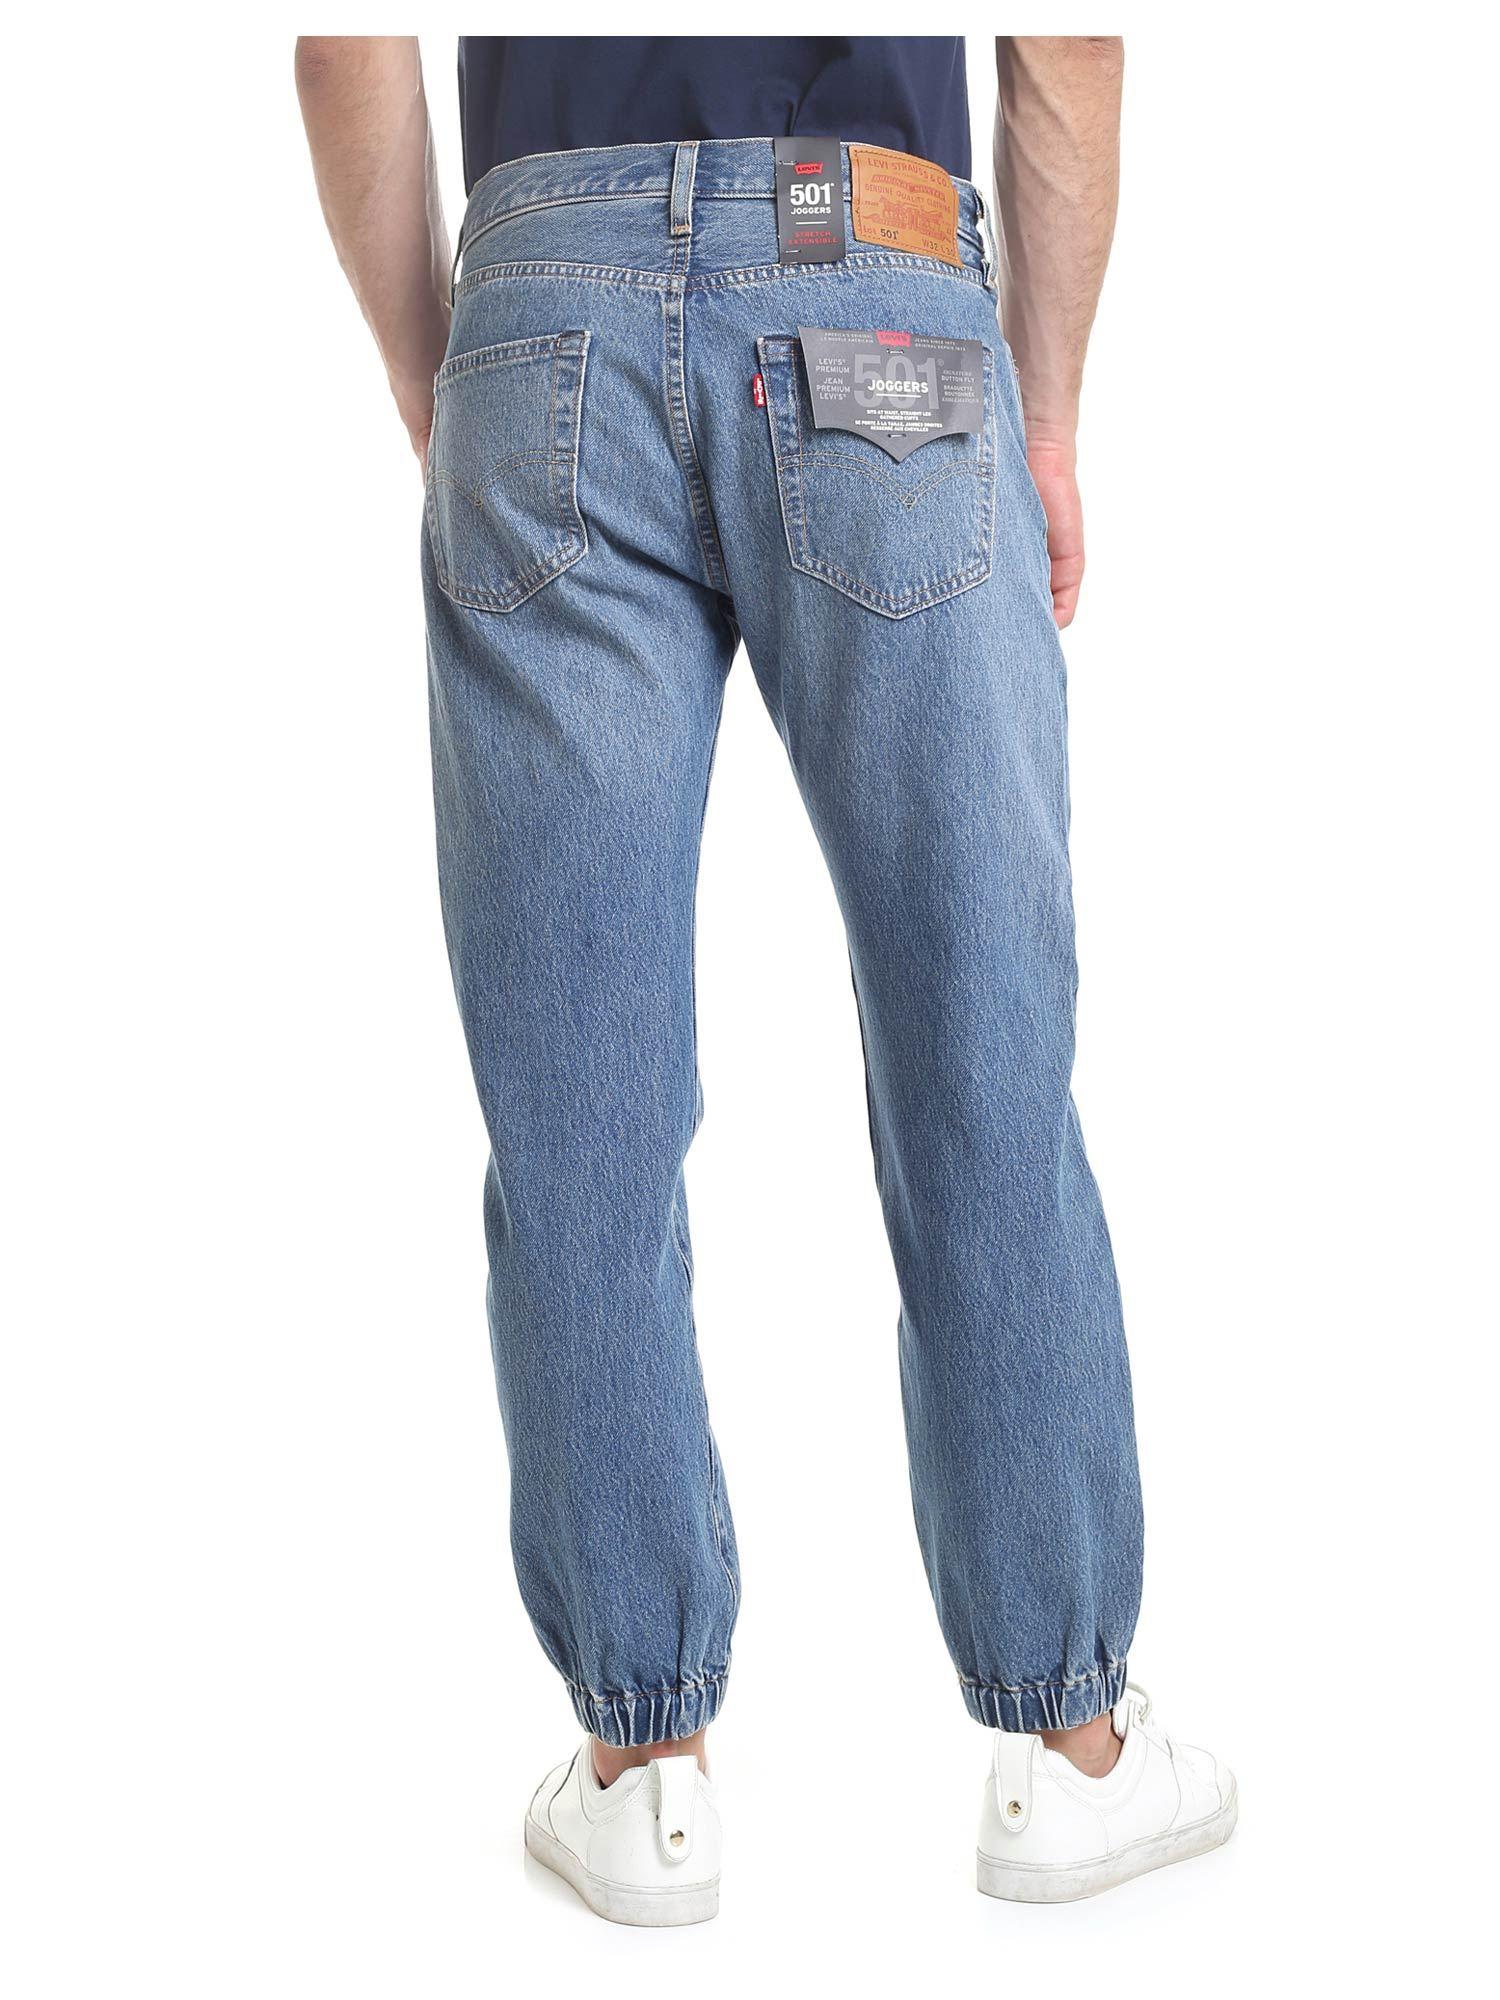 Levi's Denim Jeans 501 jogger In Blue for Men - Lyst